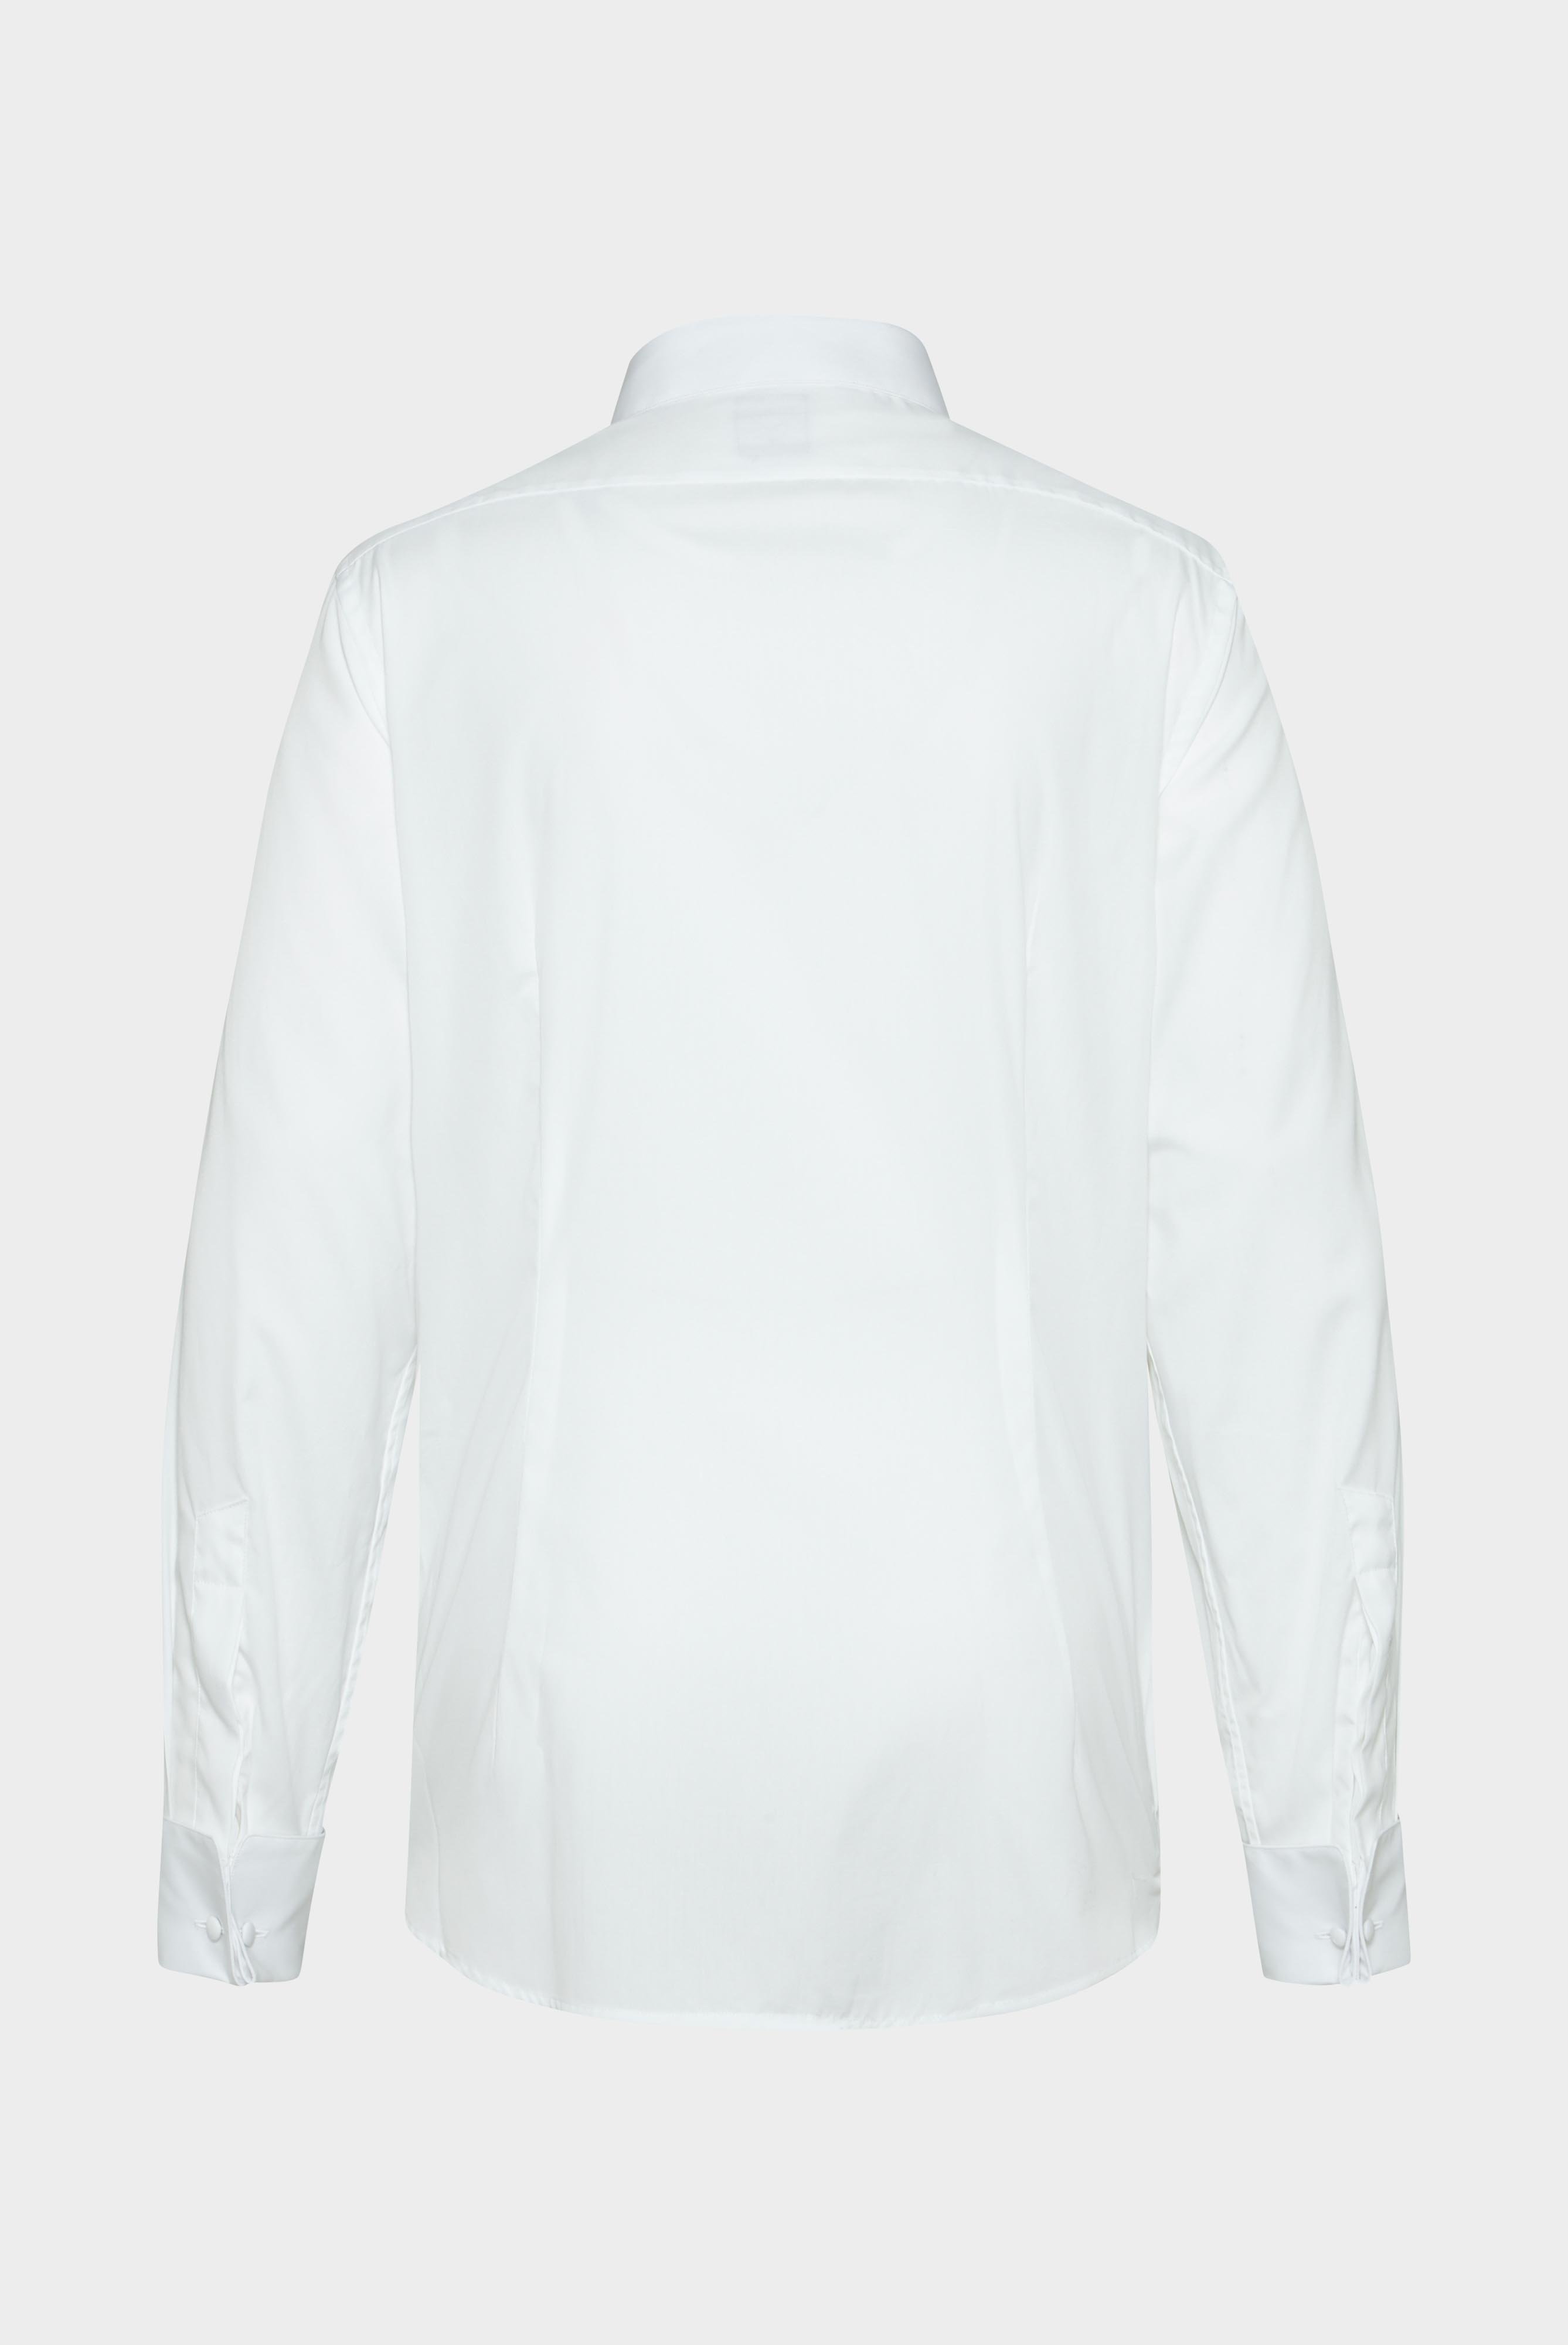 Festliche Hemden+Smokinghemd Tailor Fit+20.2062.NV.130648.000.37